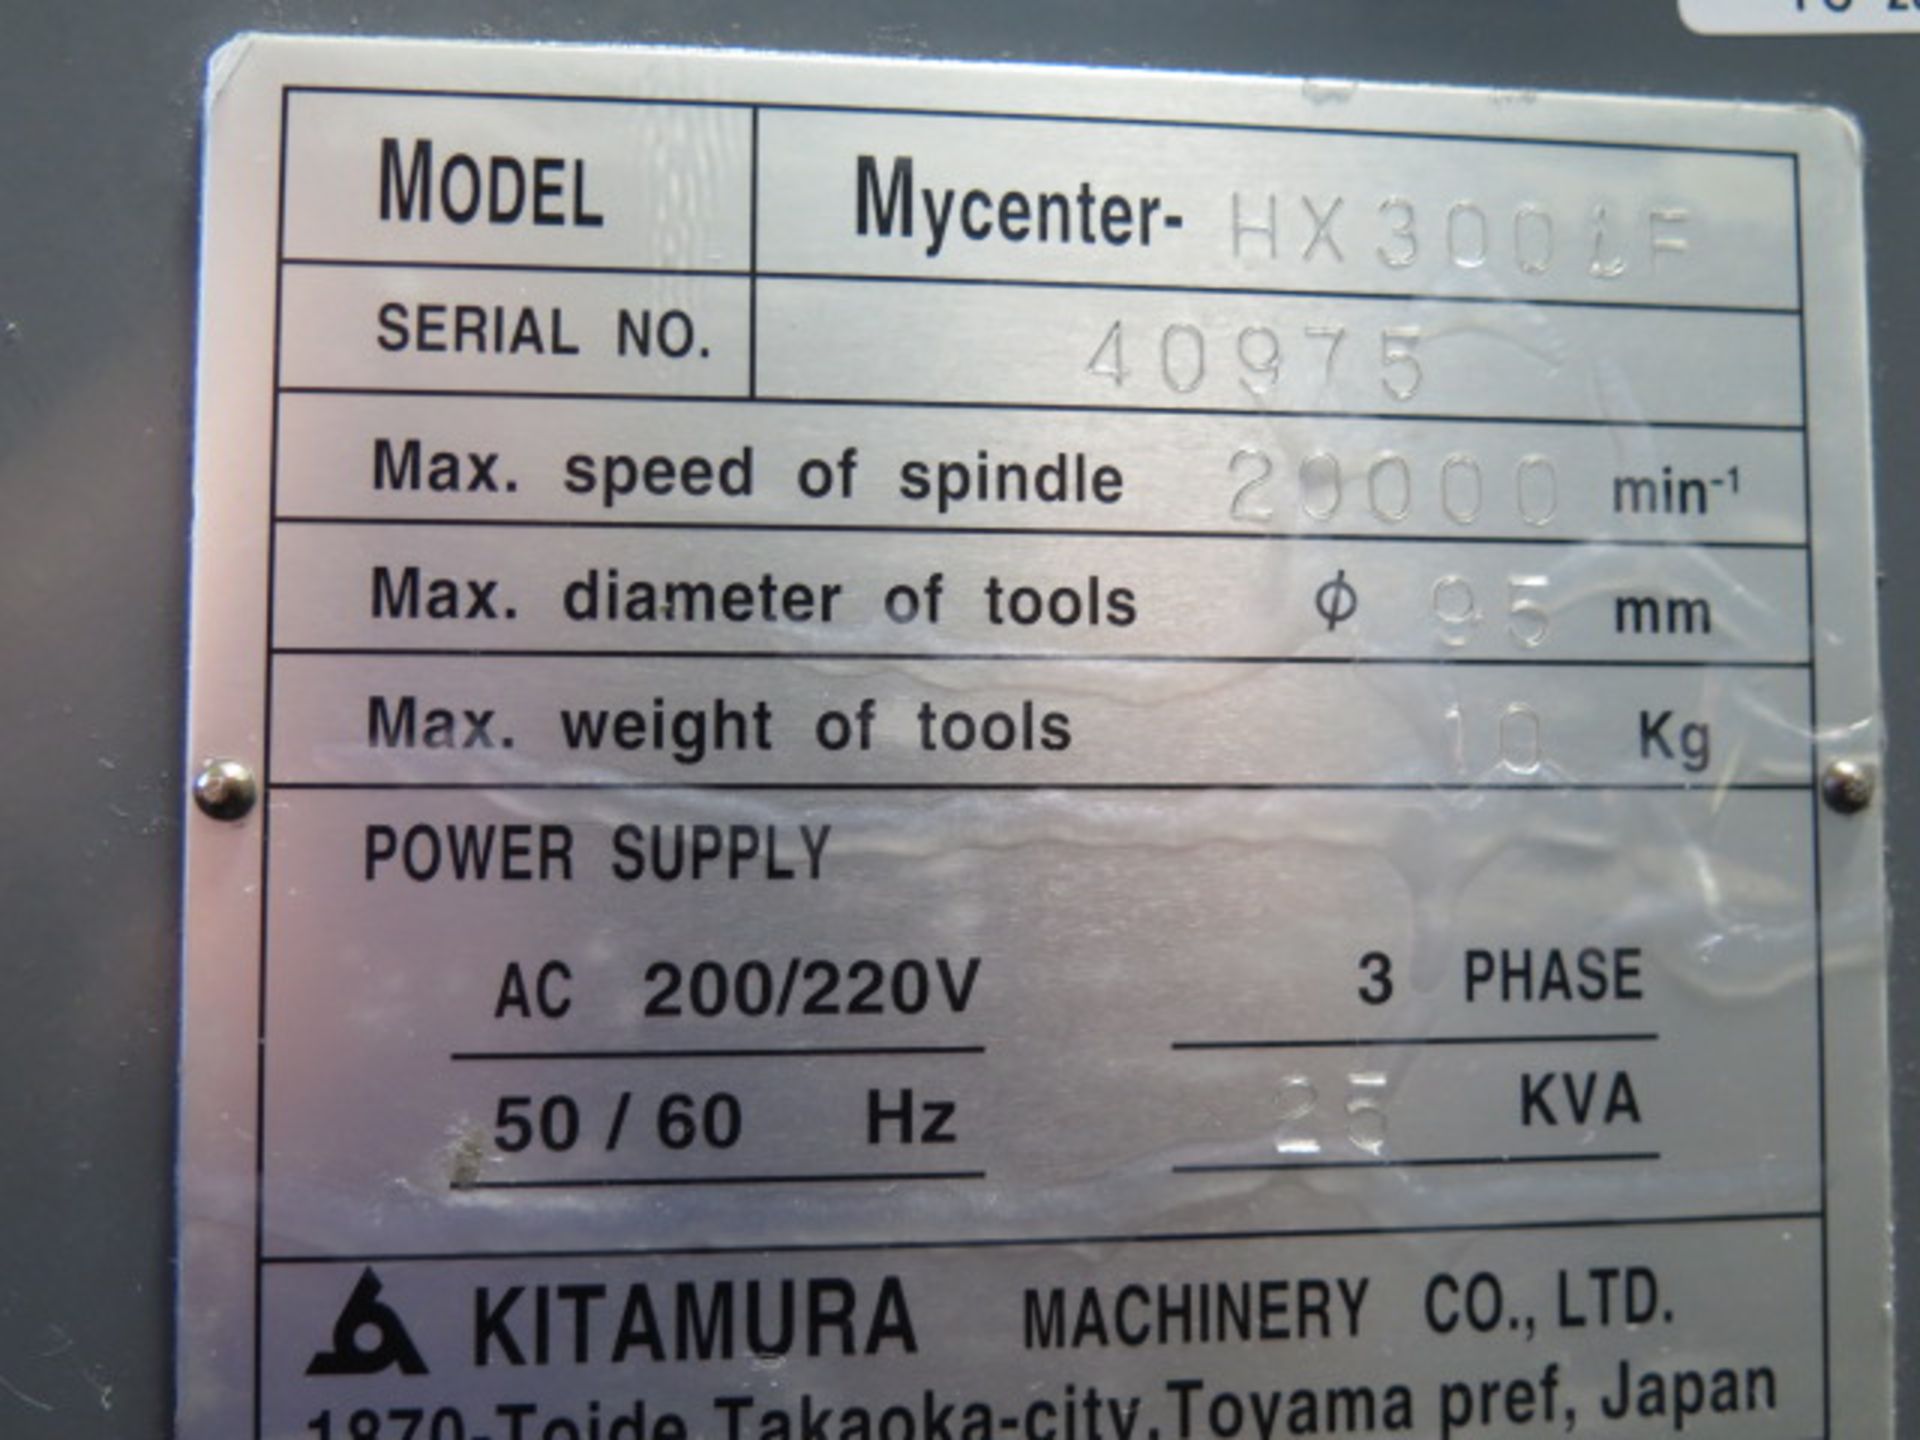 Kitamura Mycenter-HX300iF 2-Pallet 4-Axis CNC Horizontal Machining Center s/n 40975 w/ Fanuc Series - Image 22 of 22